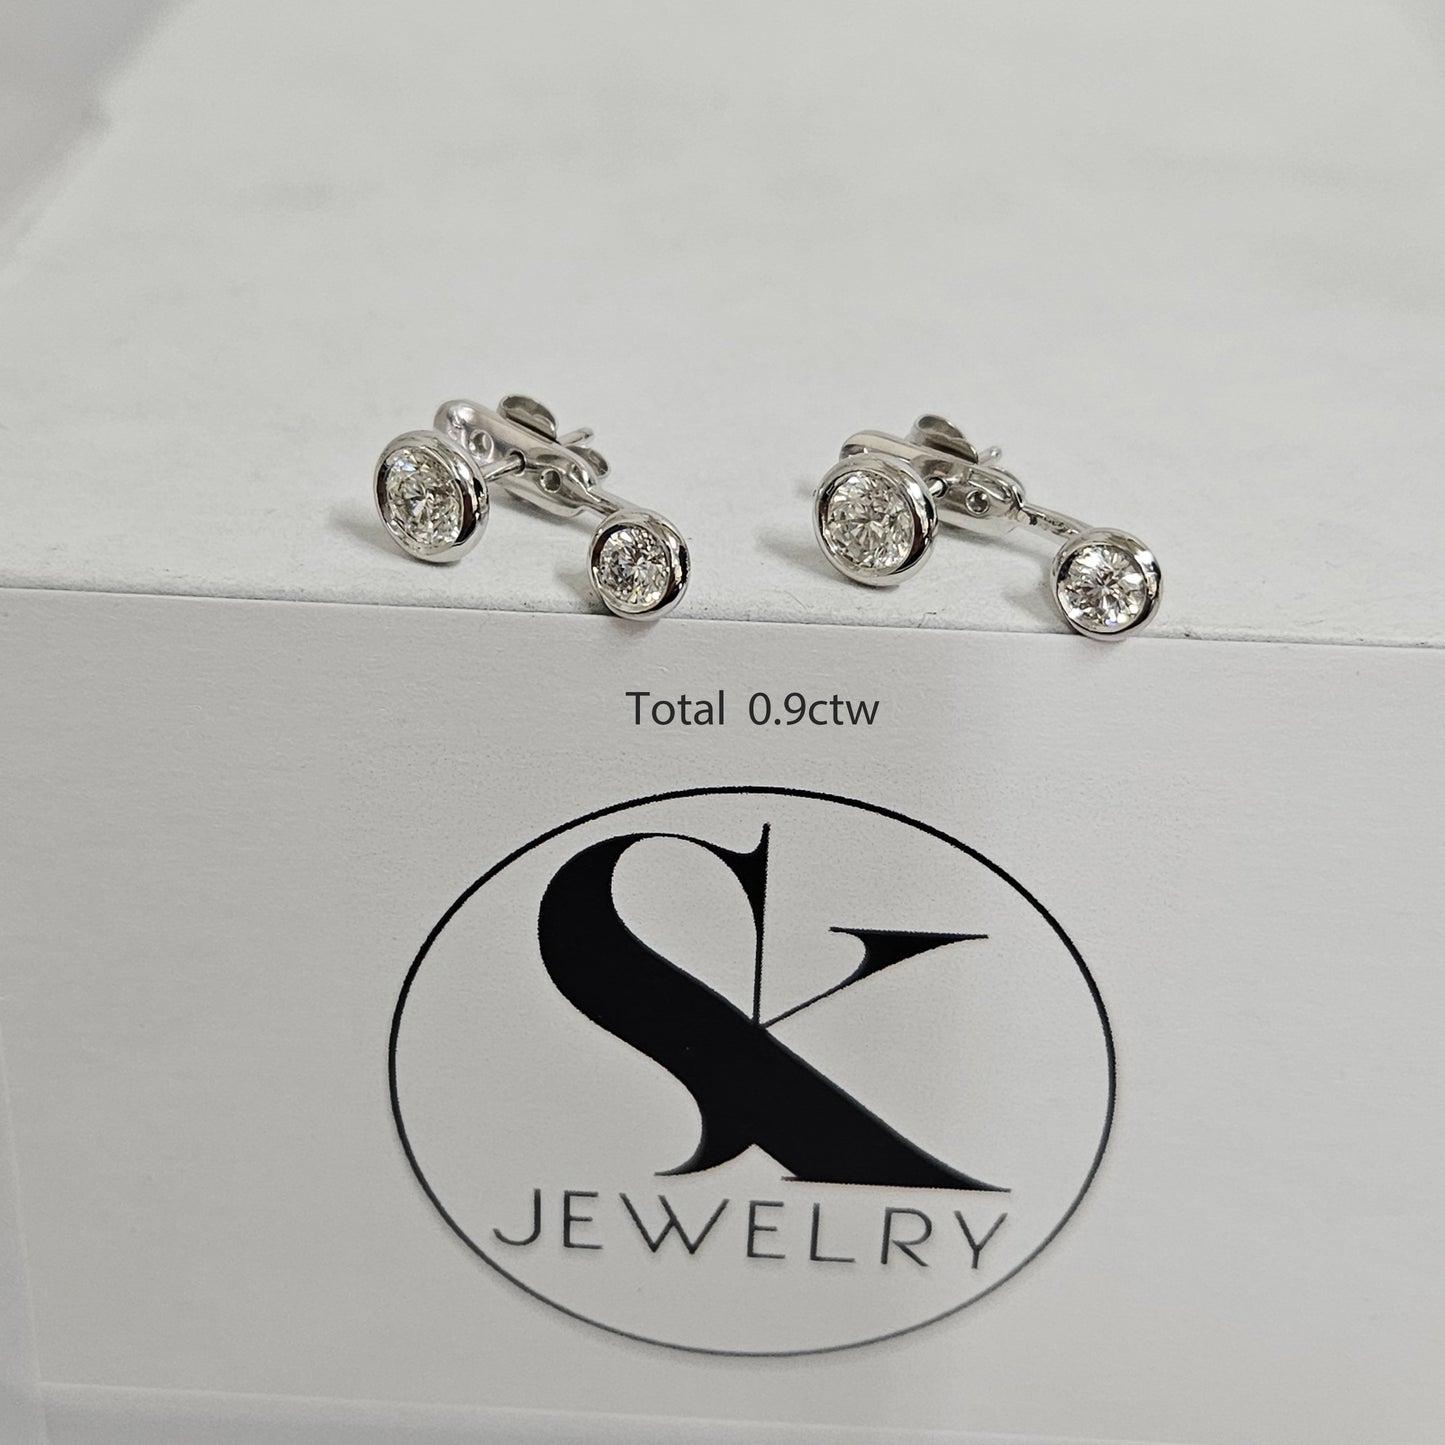 Diamond Jacket Earrings / Bezel Set Round Diamond Earrings / Ear Jacket Earrings / Diamond Earrings / Single or Pair Earrings/Gifts for her